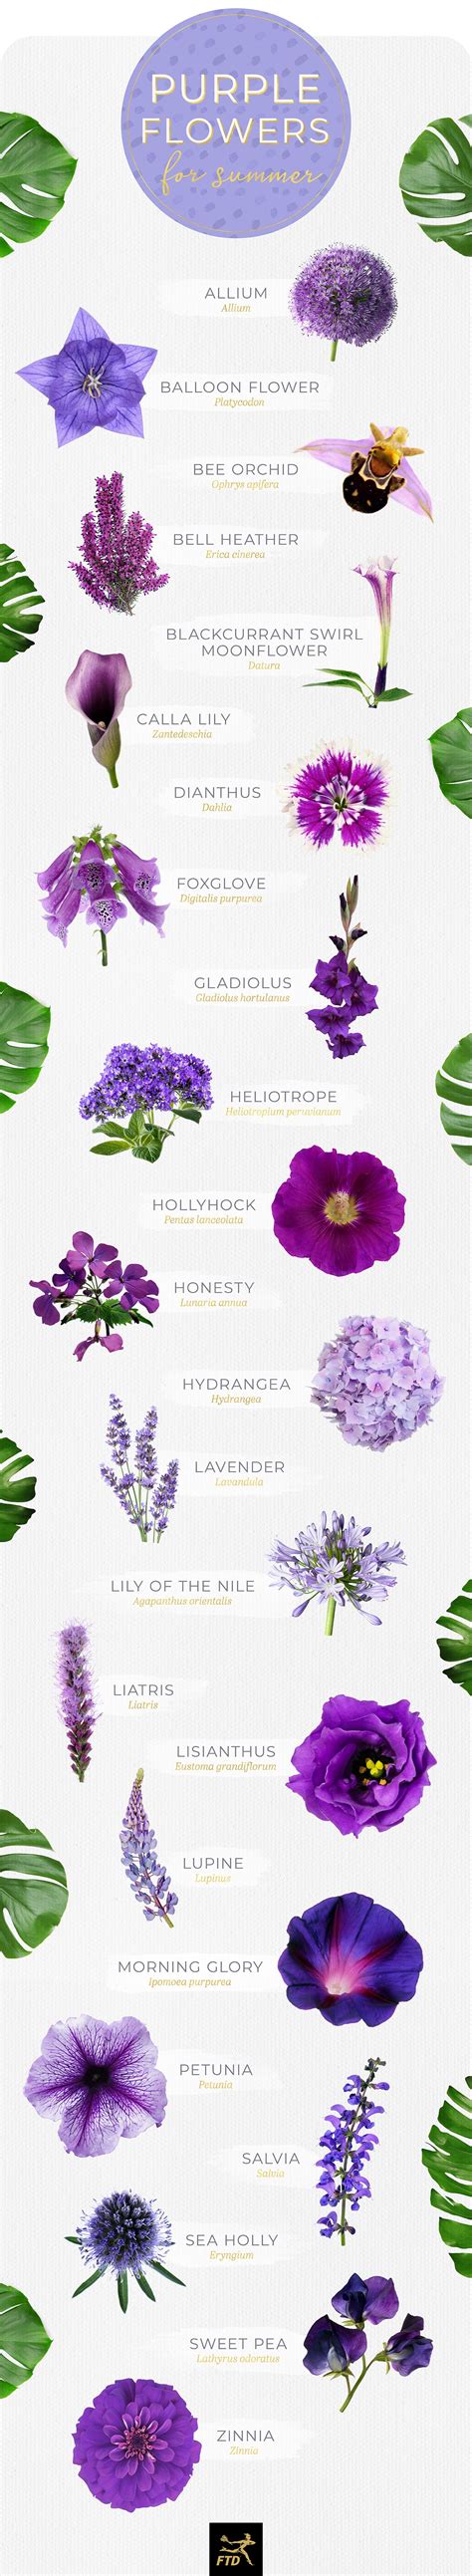 50 Types Of Purple Flowers Purple Flower Names Types Of